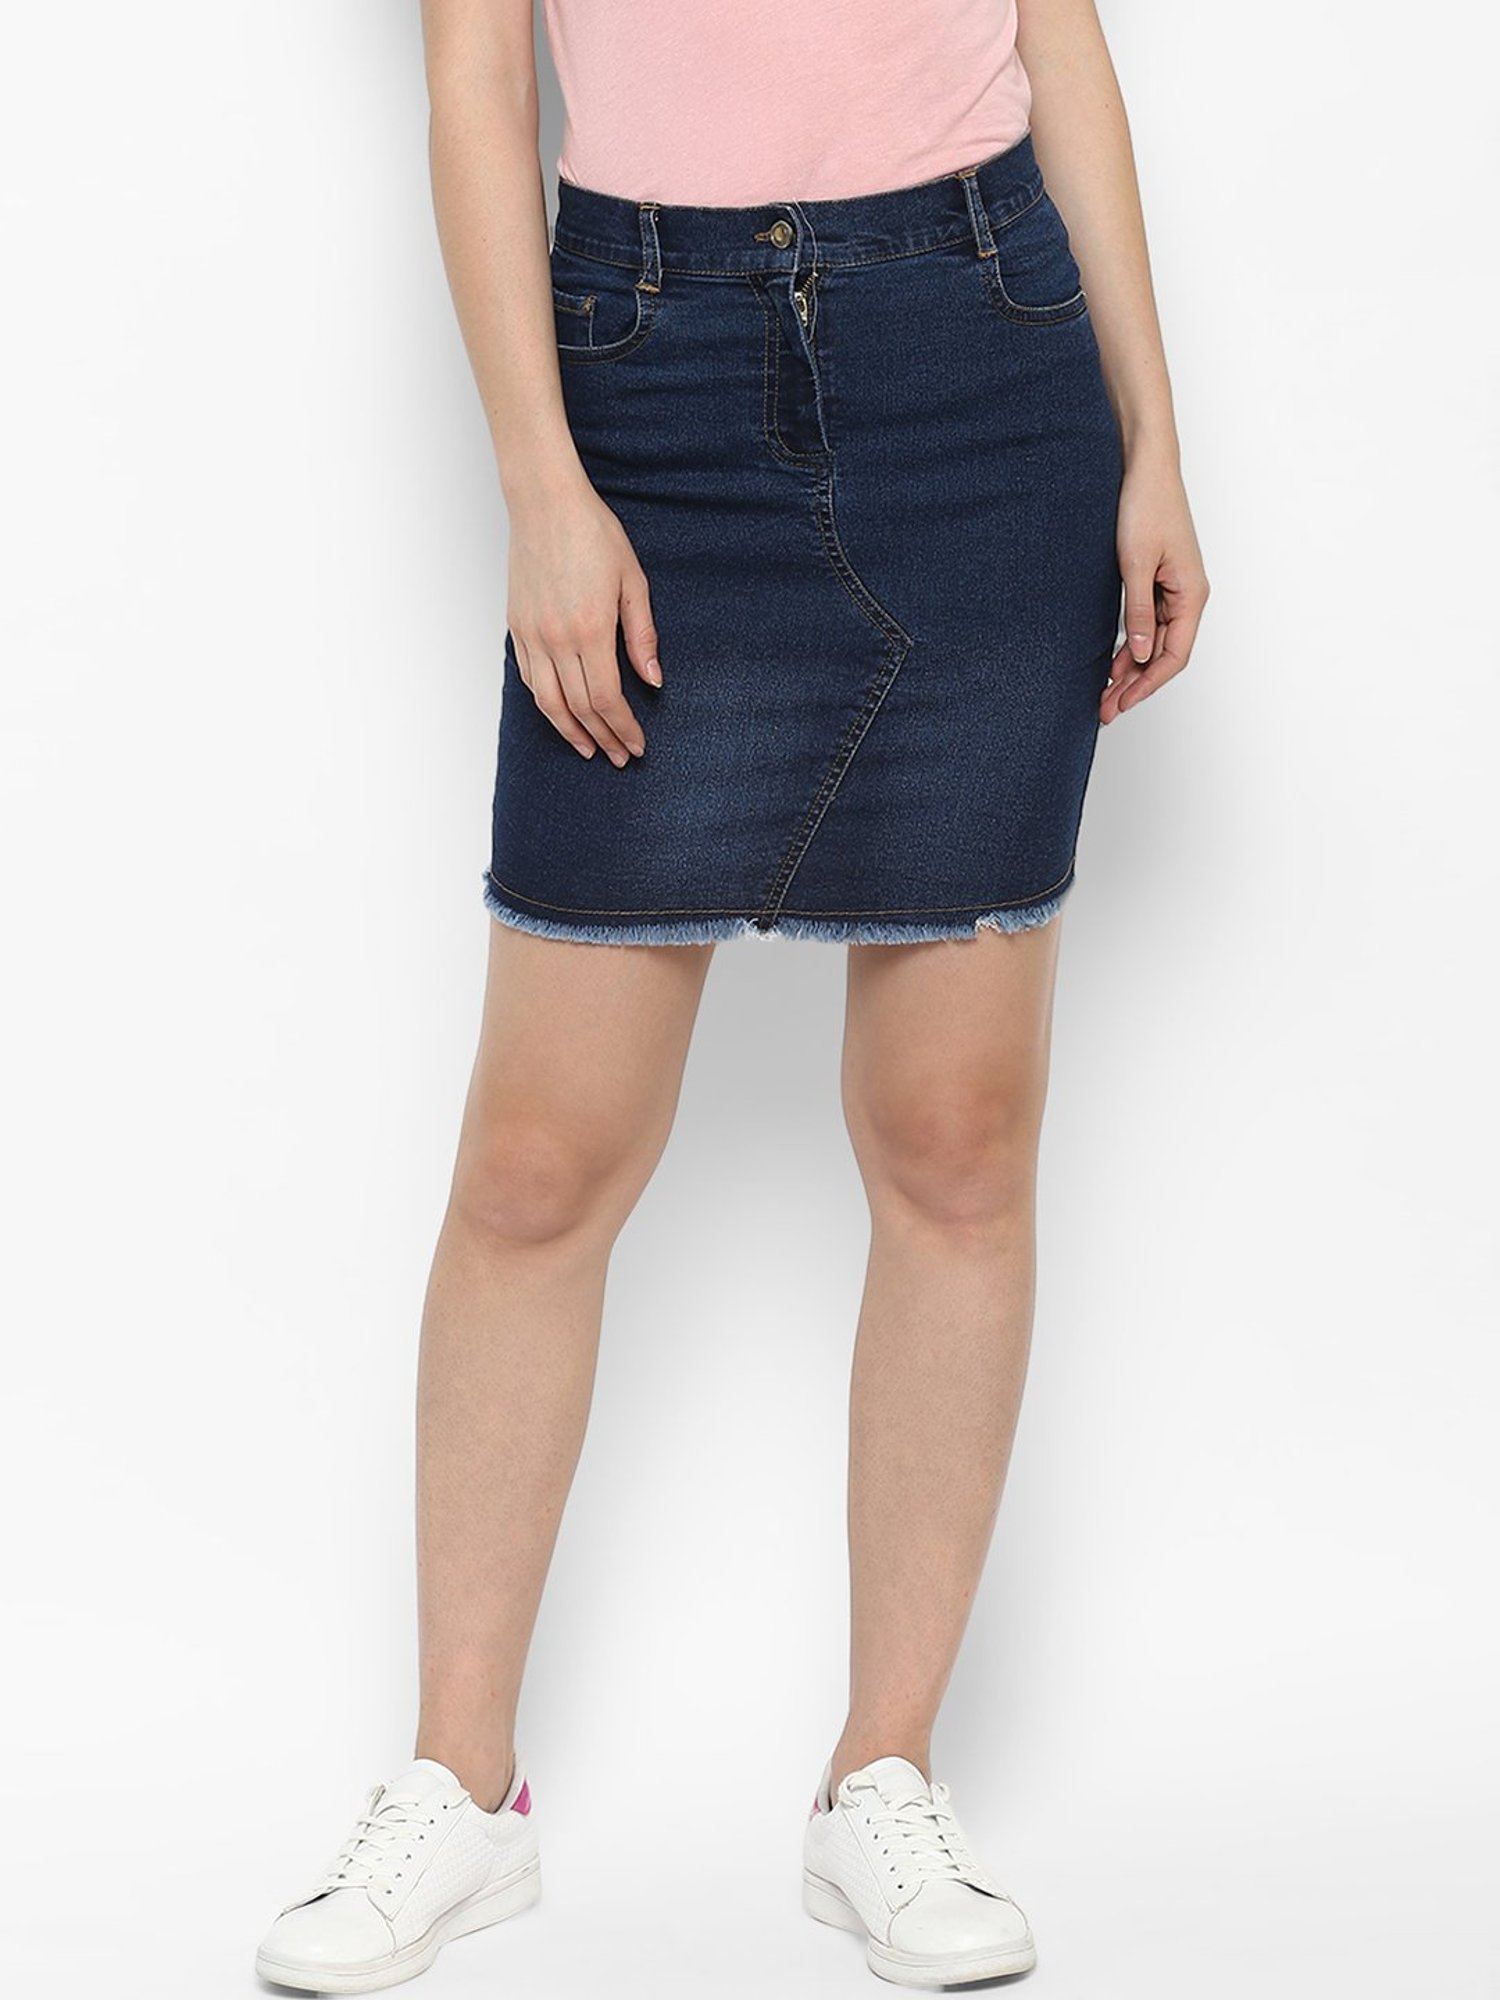 Buy ESTEEZ Jean Skirt for Women Knee Length Manhattan Blue 10 at Amazon.in